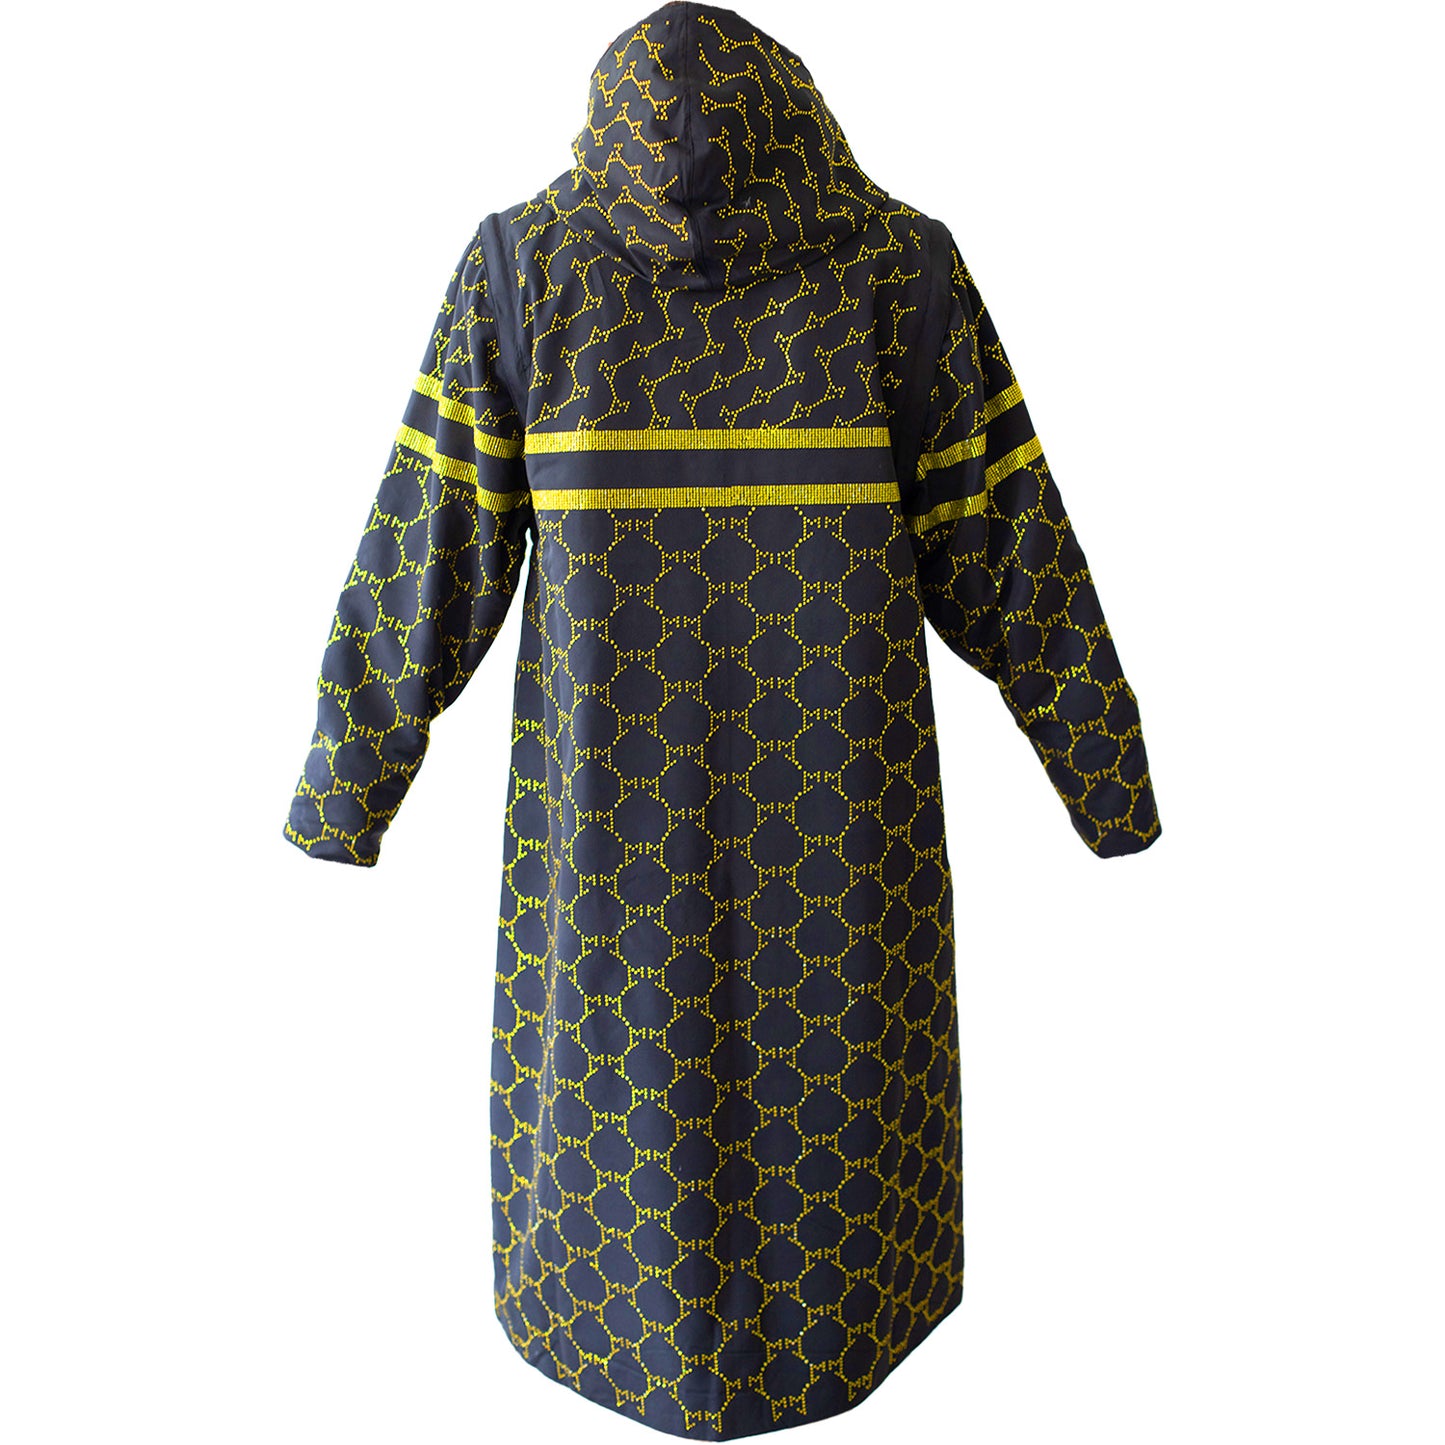 SALE Swarovski gold raincoat/vest